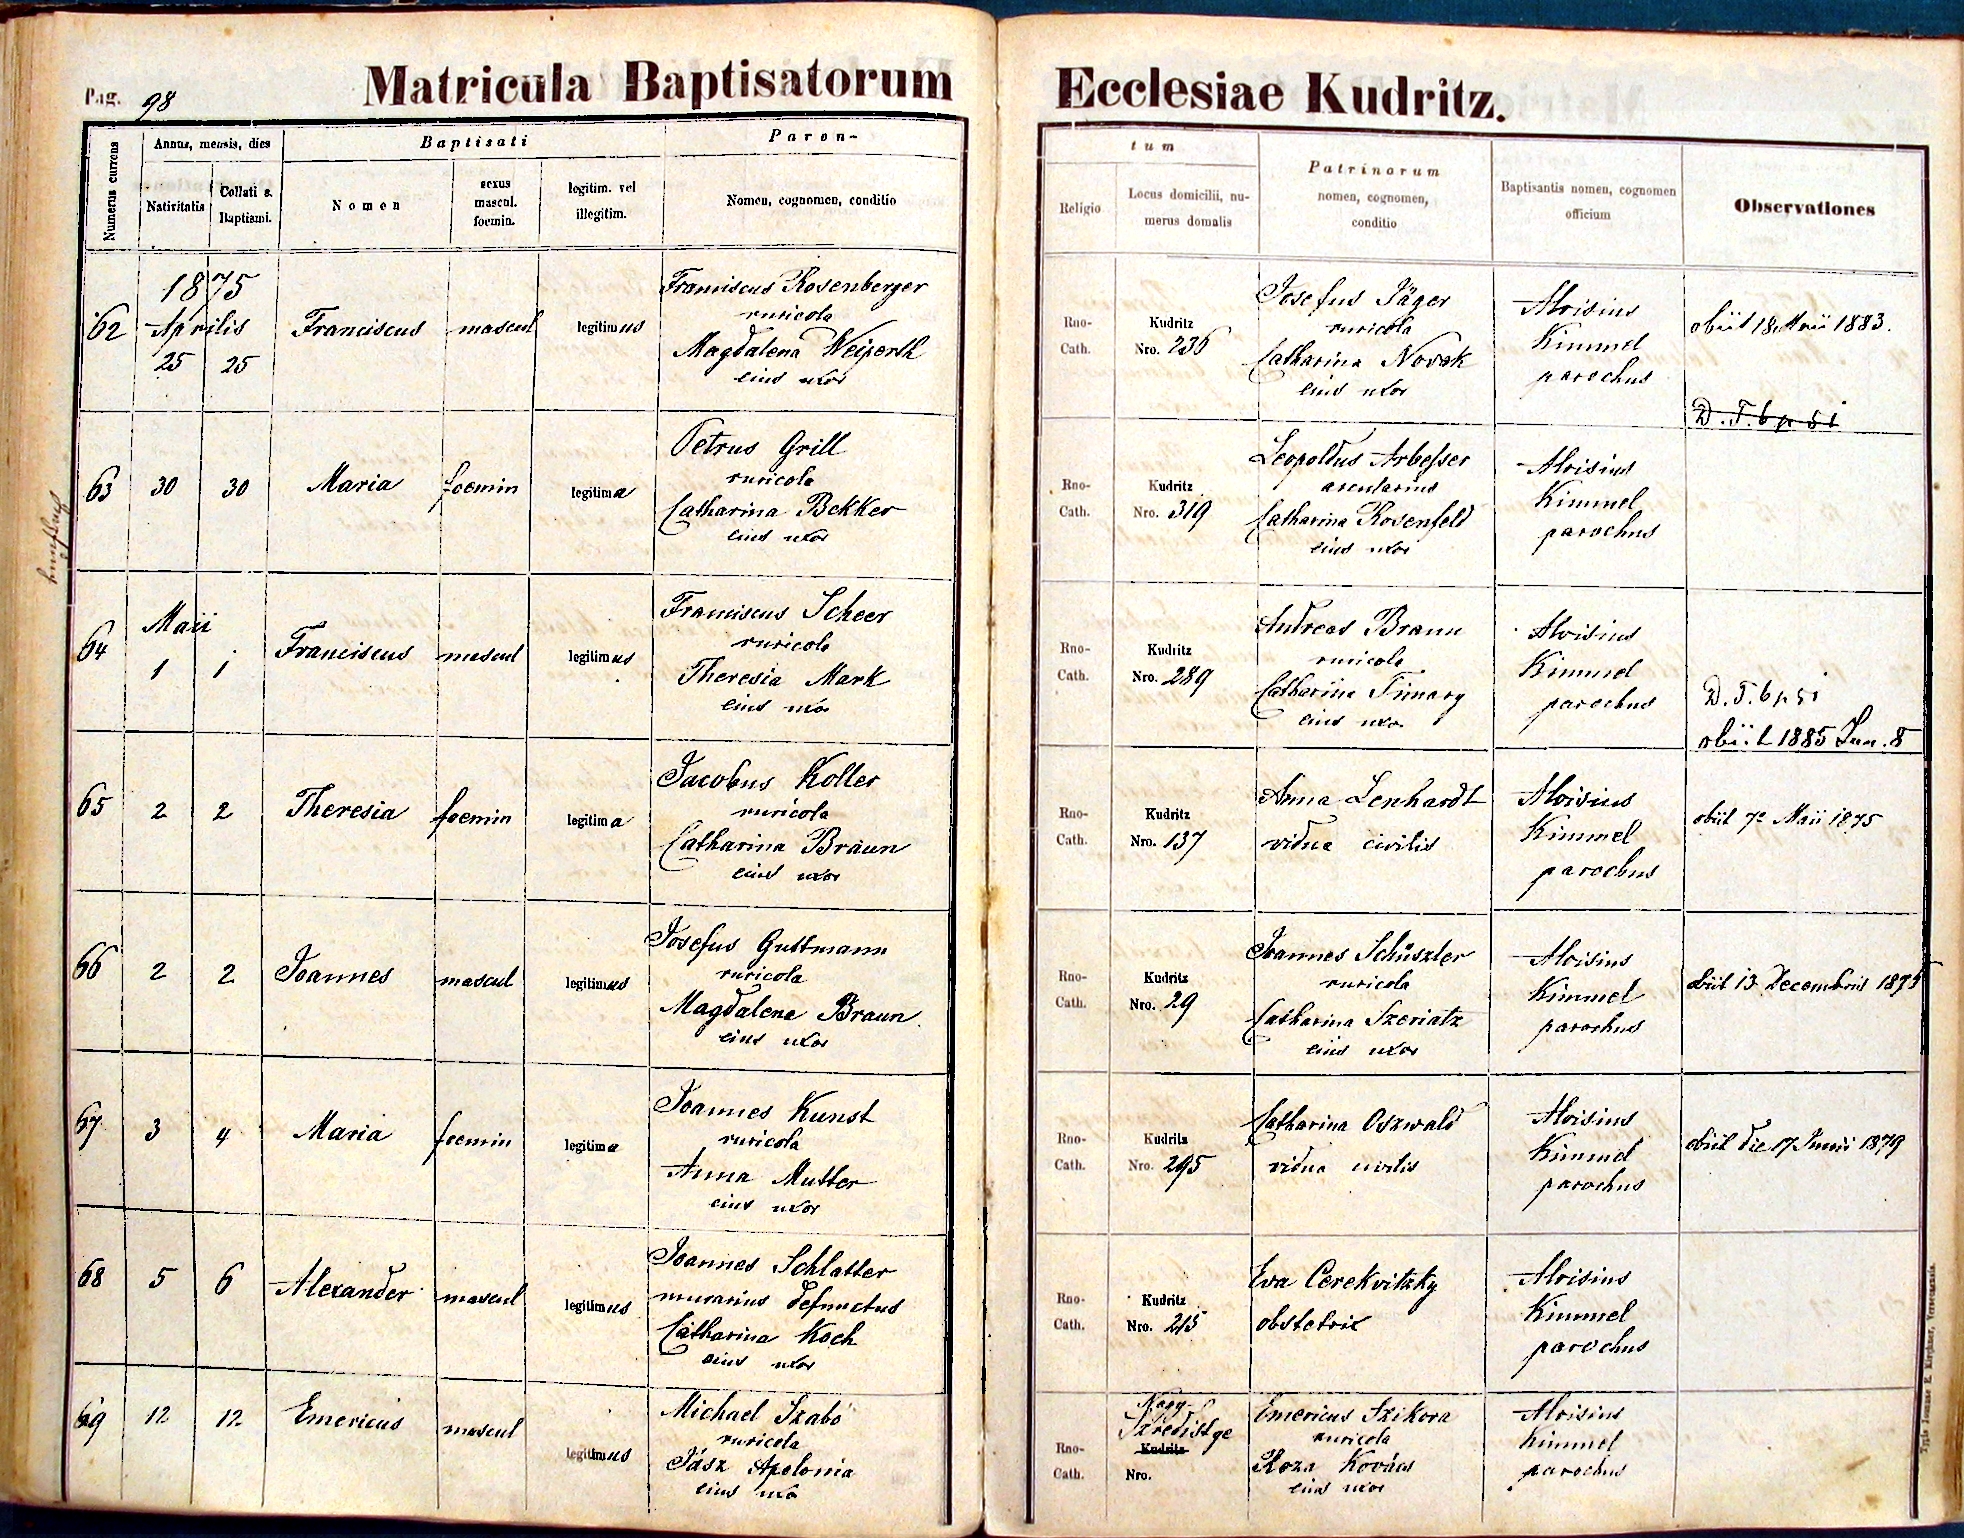 images/church_records/BIRTHS/1884-1899B/1890/098